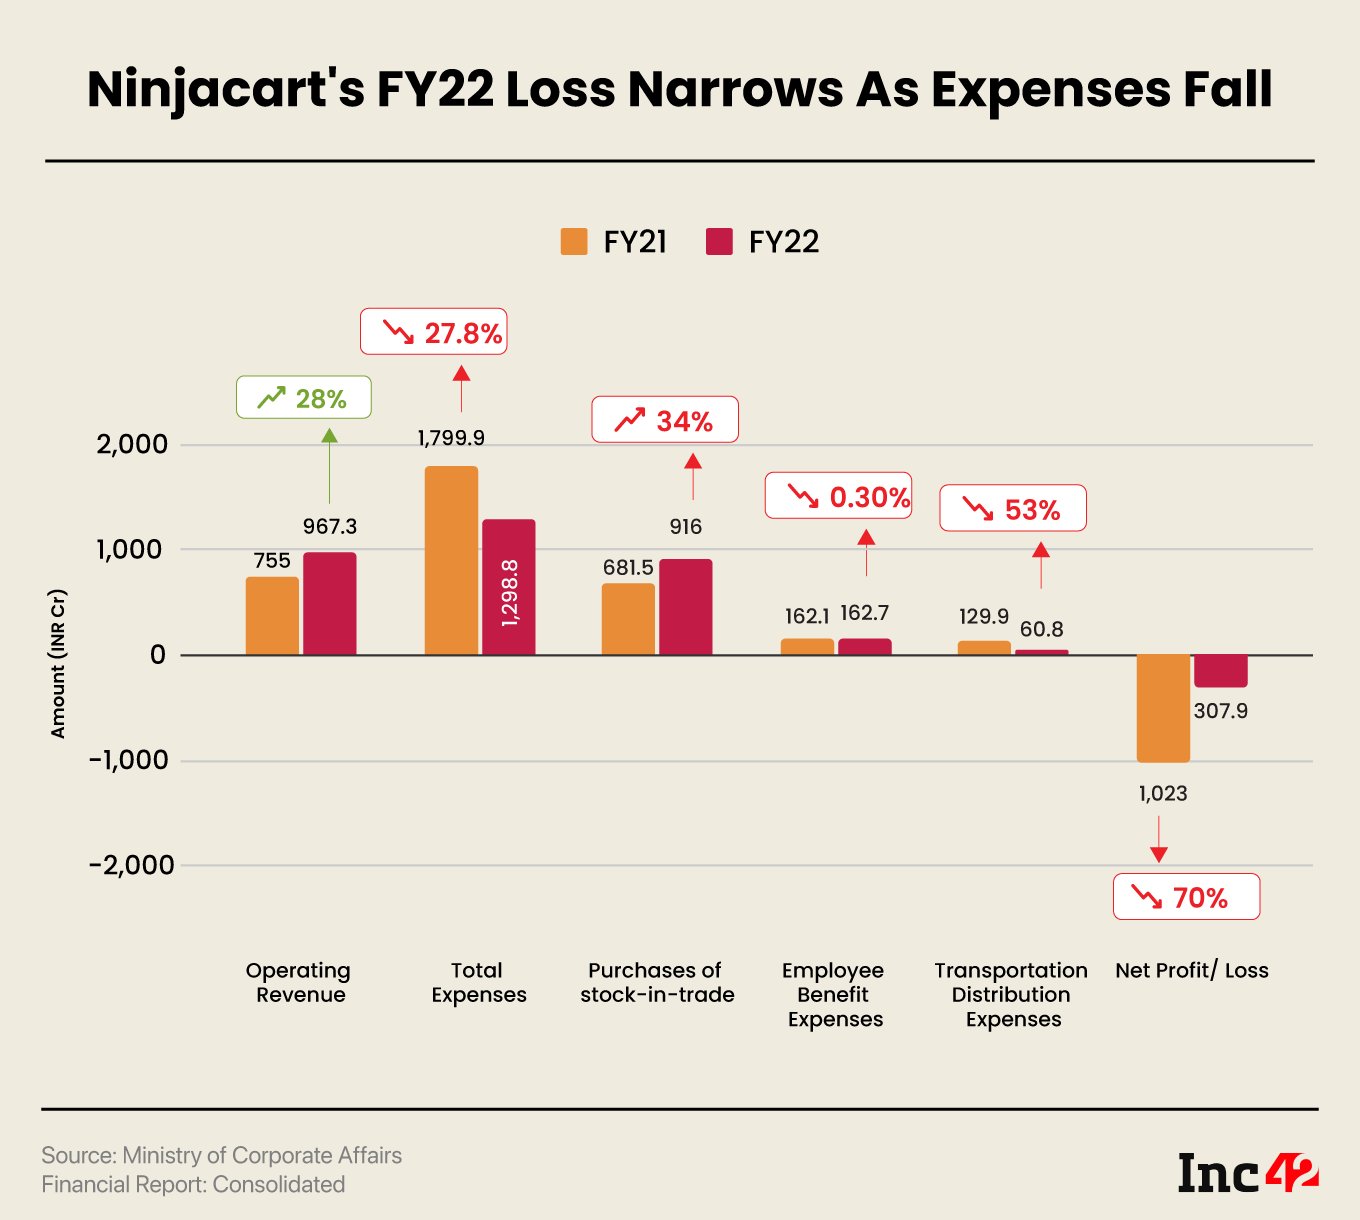 Ninjacart’s Net Loss Narrows 70% To INR 308 Cr In FY22 